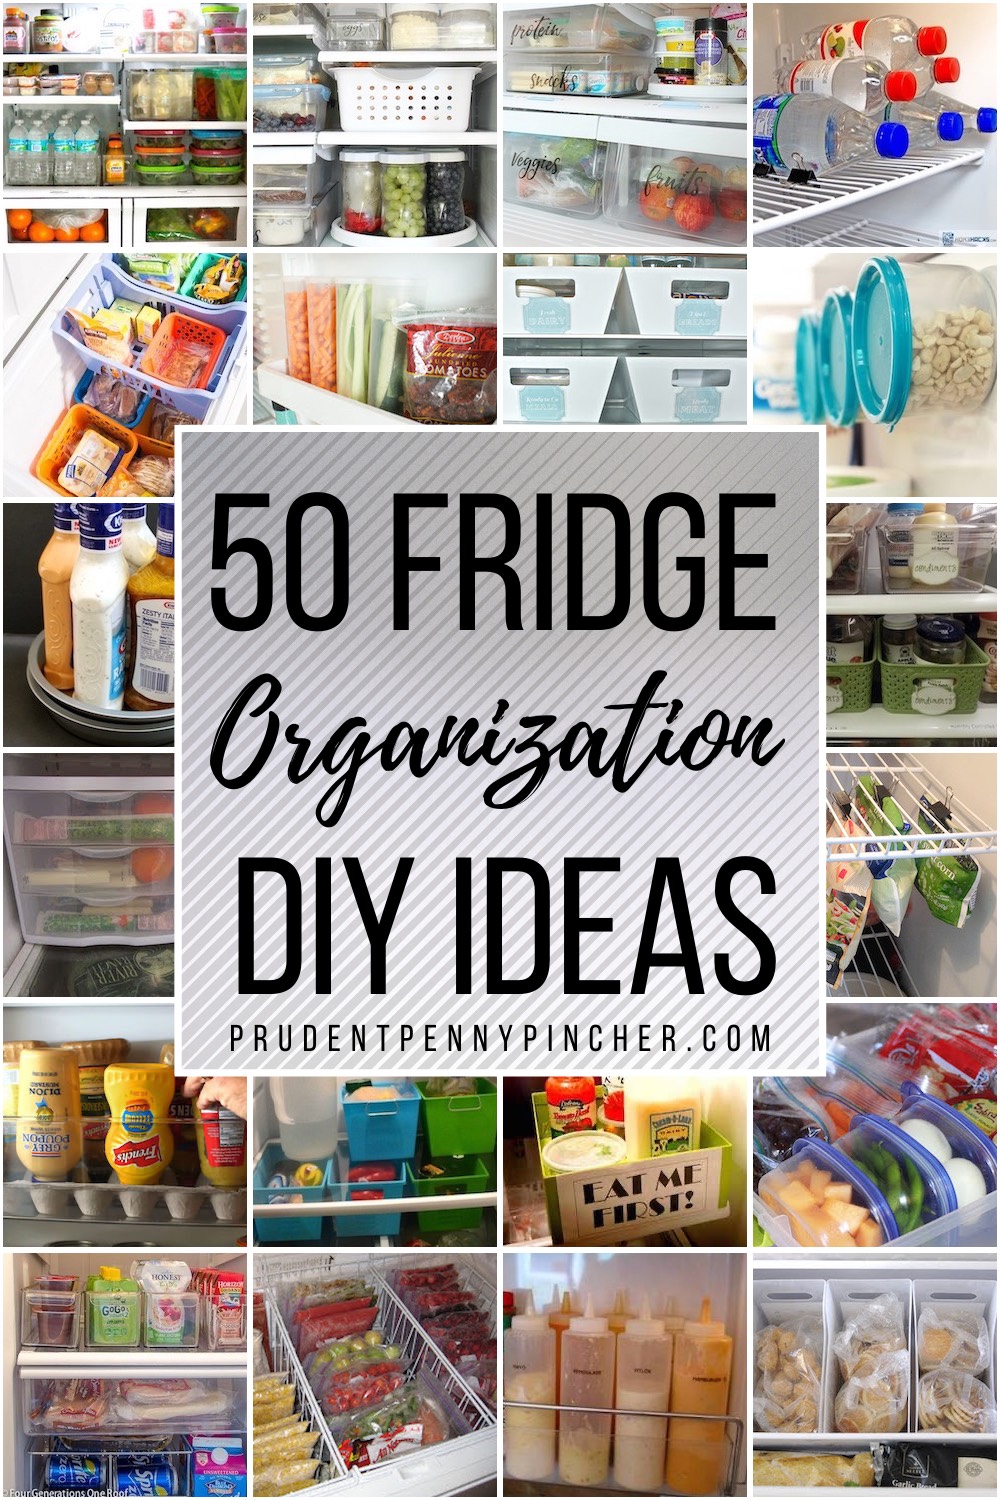 100 Best Organizing Tips - Easy Home Organization Ideas